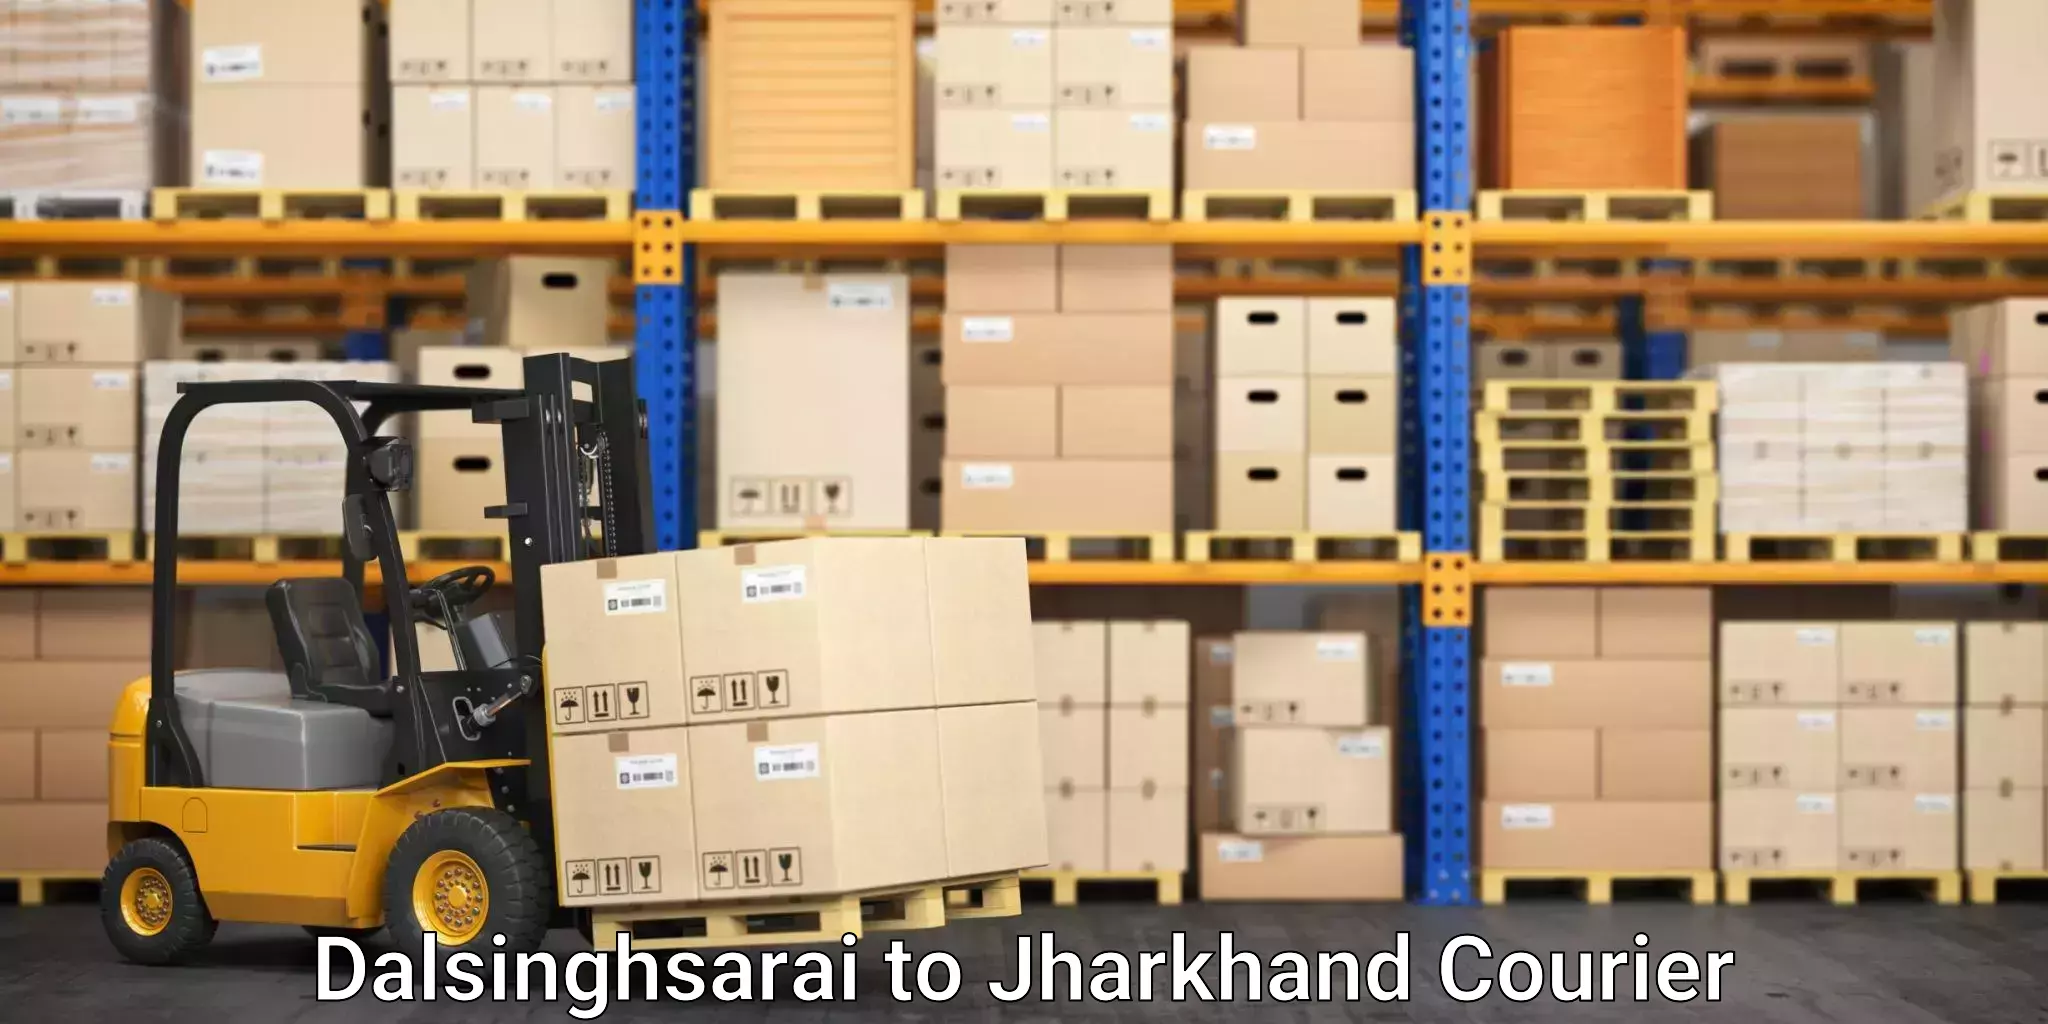 Household goods shipping in Dalsinghsarai to Bokaro Steel City